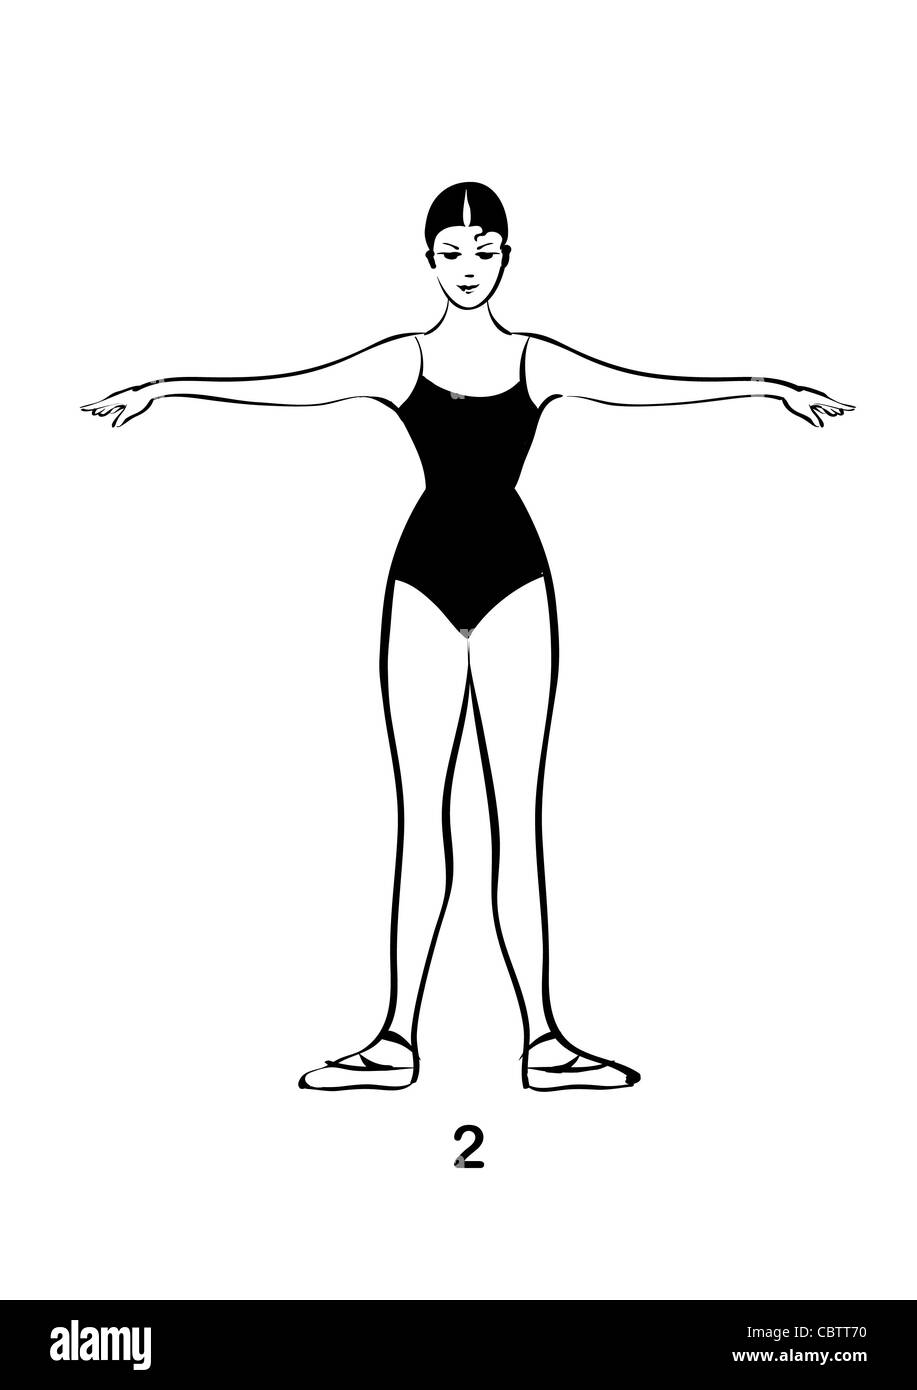 Ballet body position 2 BW illustration Stock Photo - Alamy